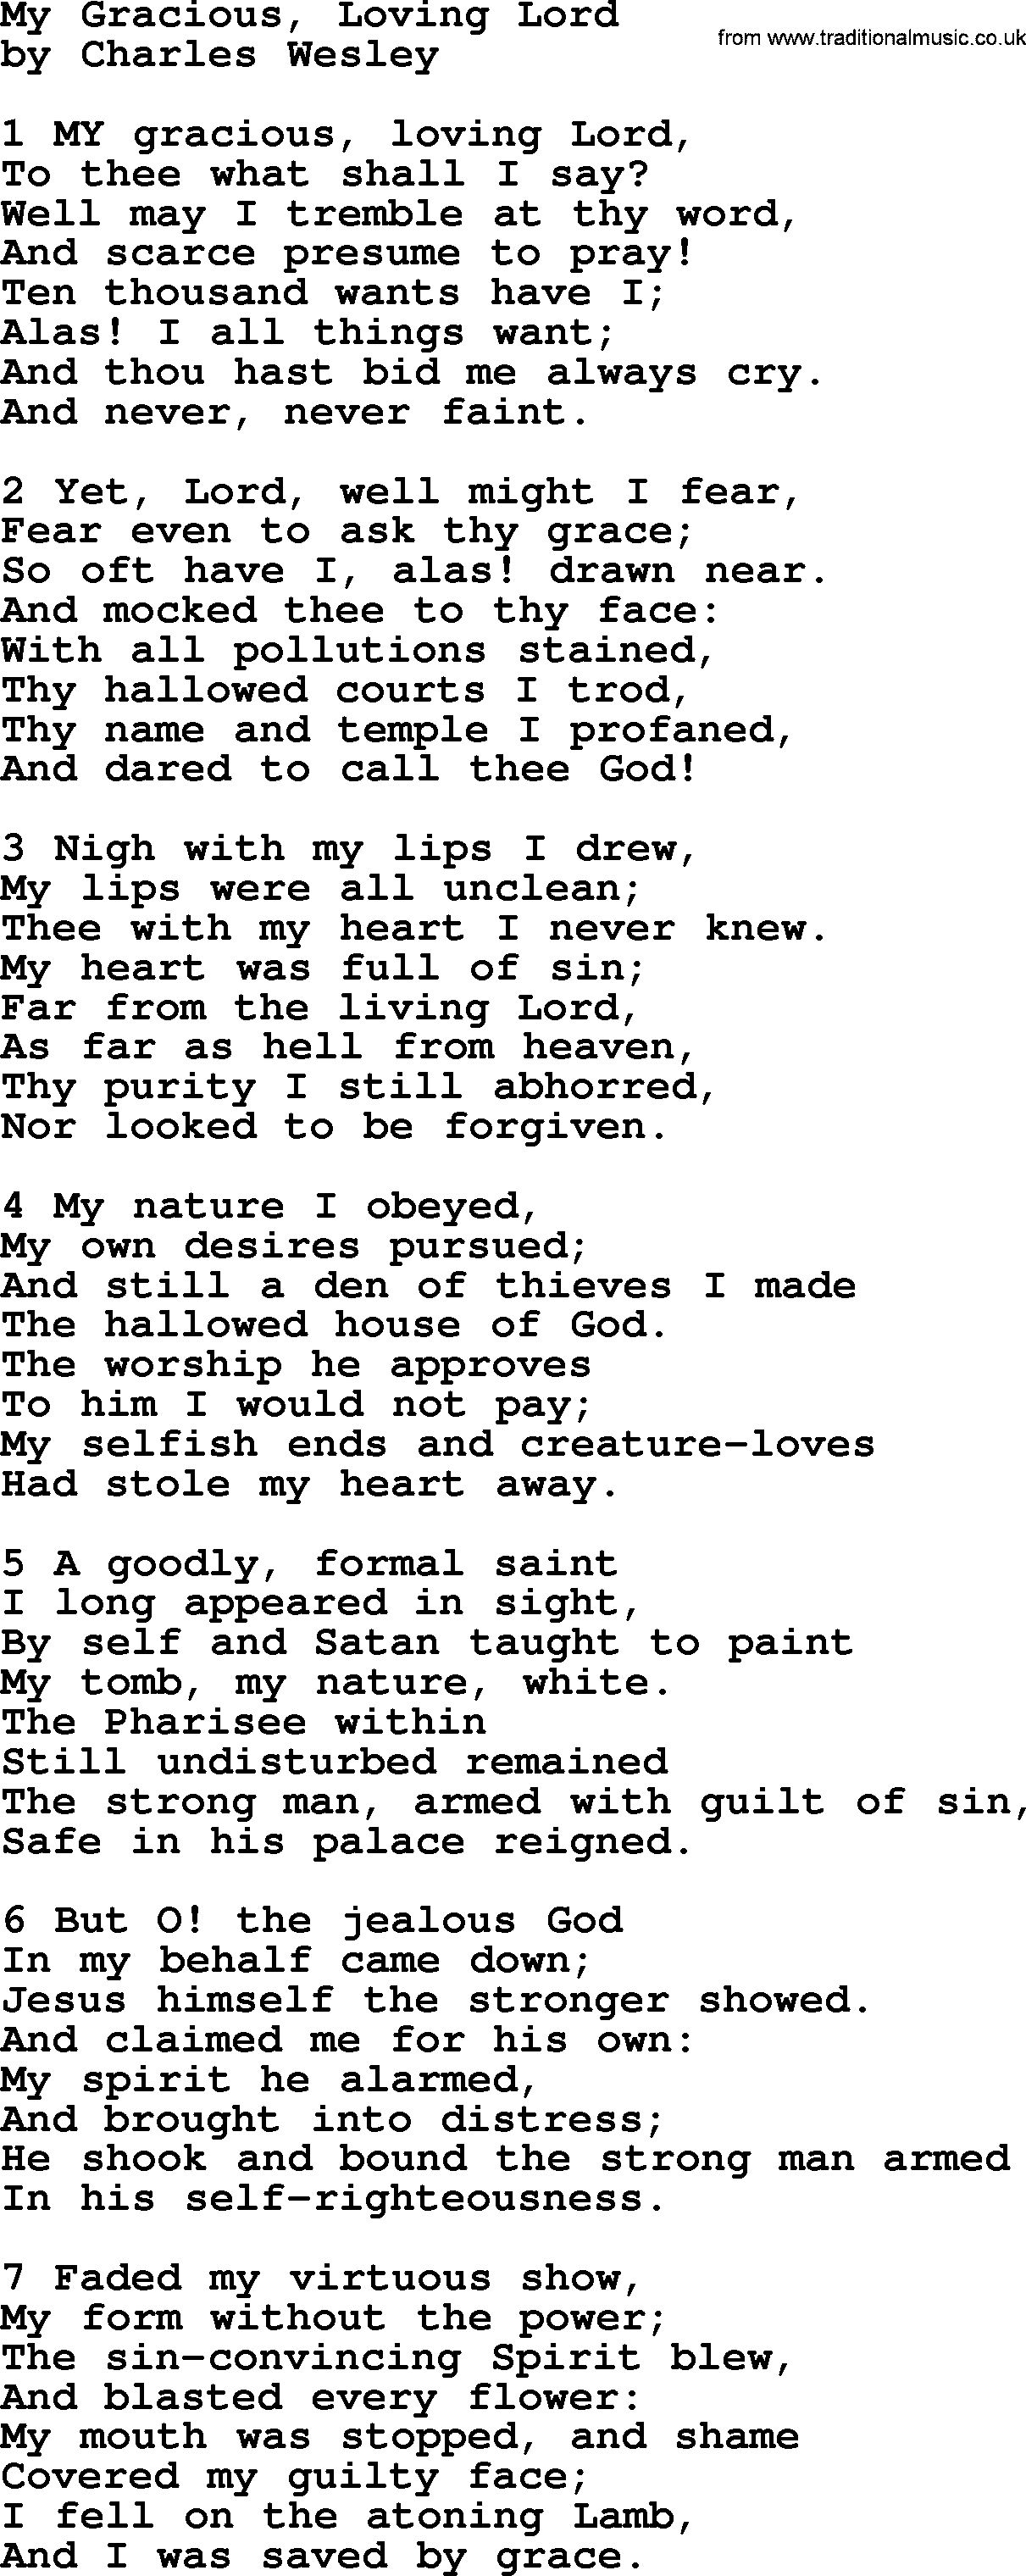 Charles Wesley hymn: My Gracious, Loving Lord, lyrics